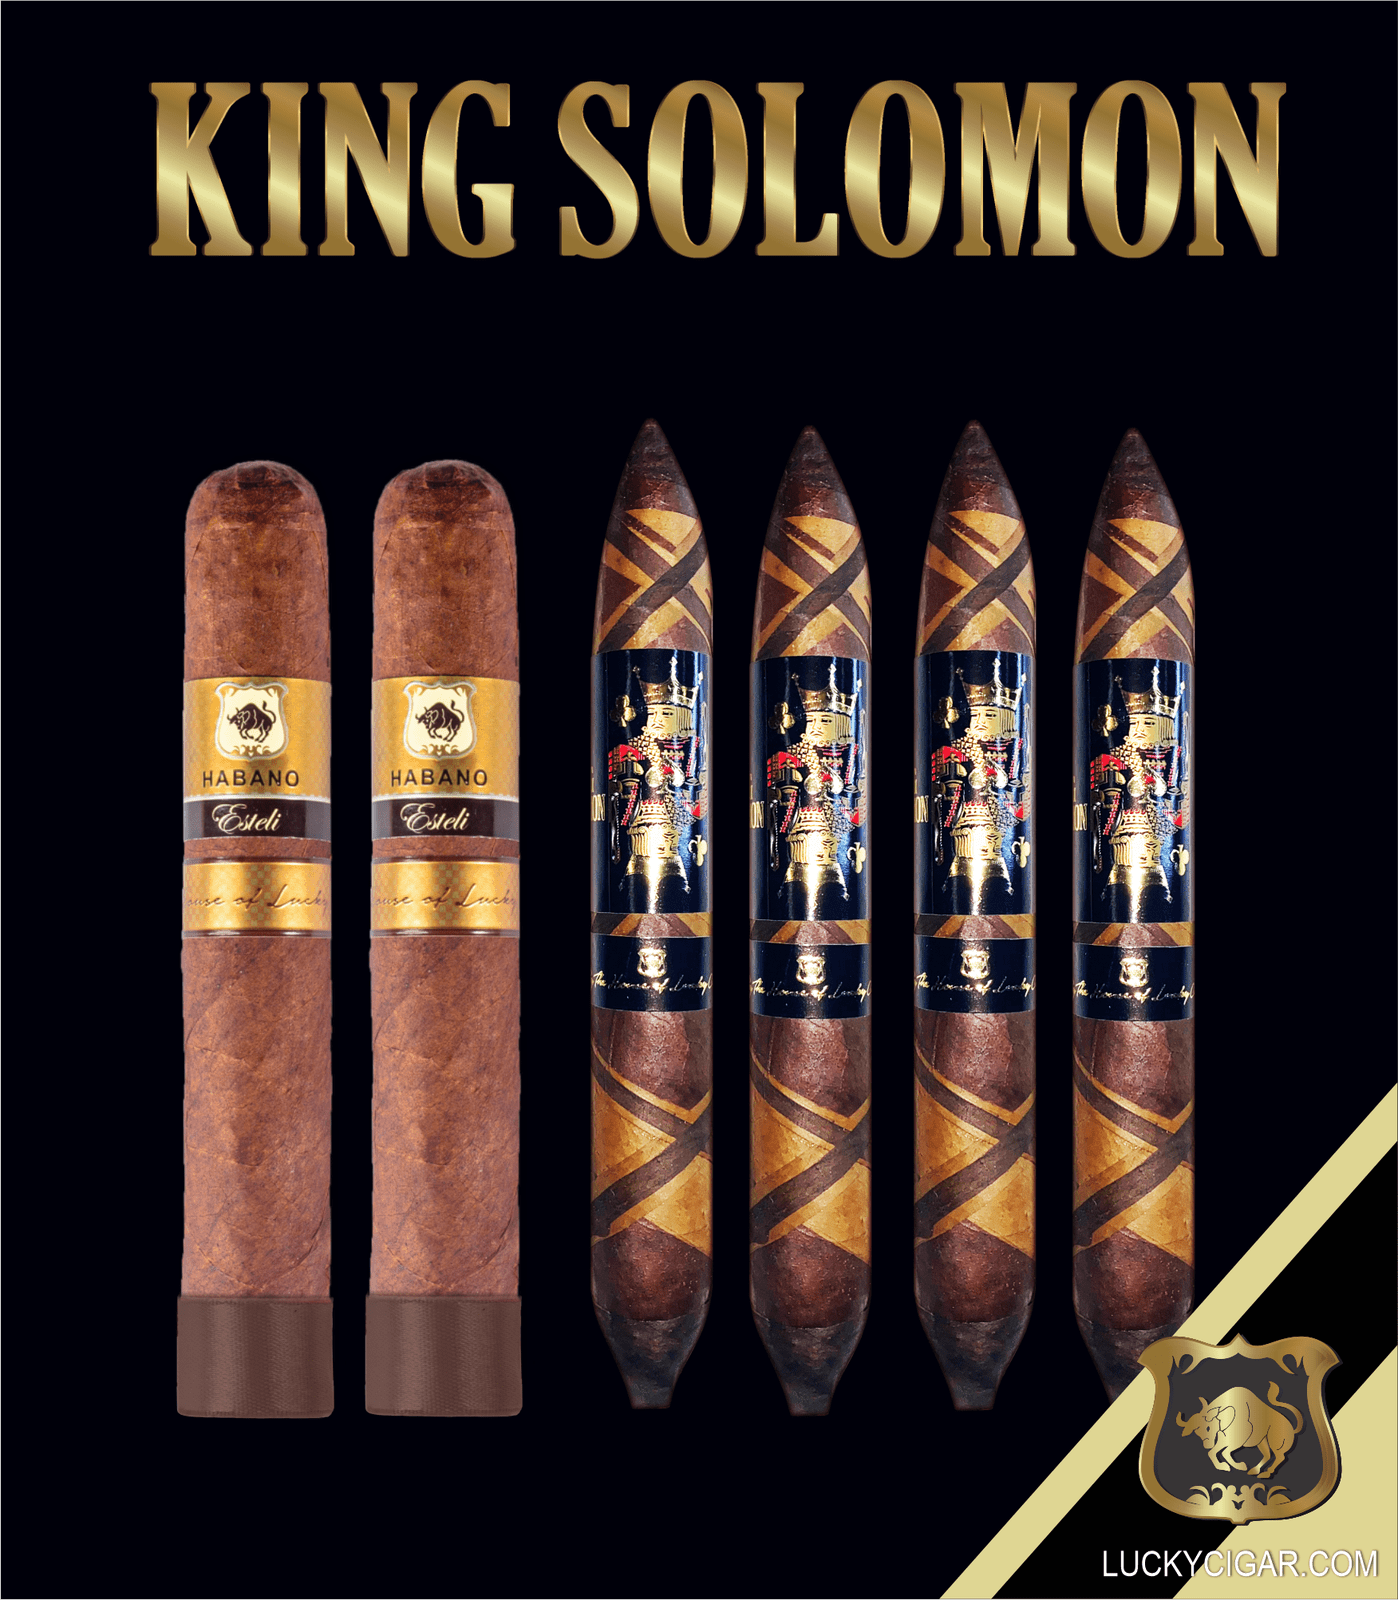 From The King Solomon Series: 4 Solomon 7x60 and 2 Habano Esteli Gordo 6x60 Cigars